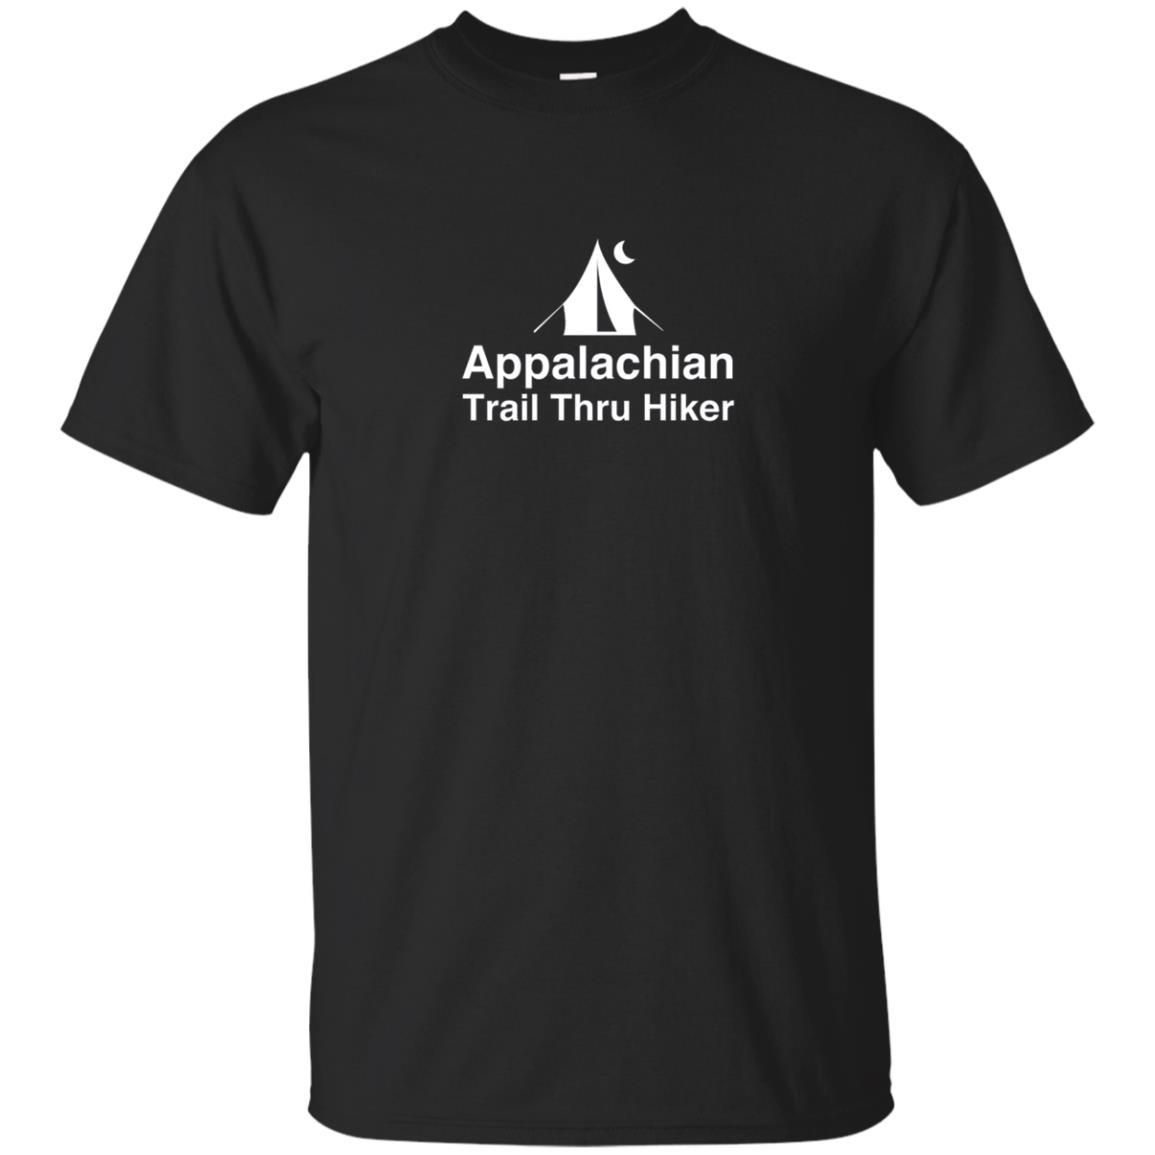 Appalachian Trail Thru Hiker At Backpacking Tent Tee T Shirt